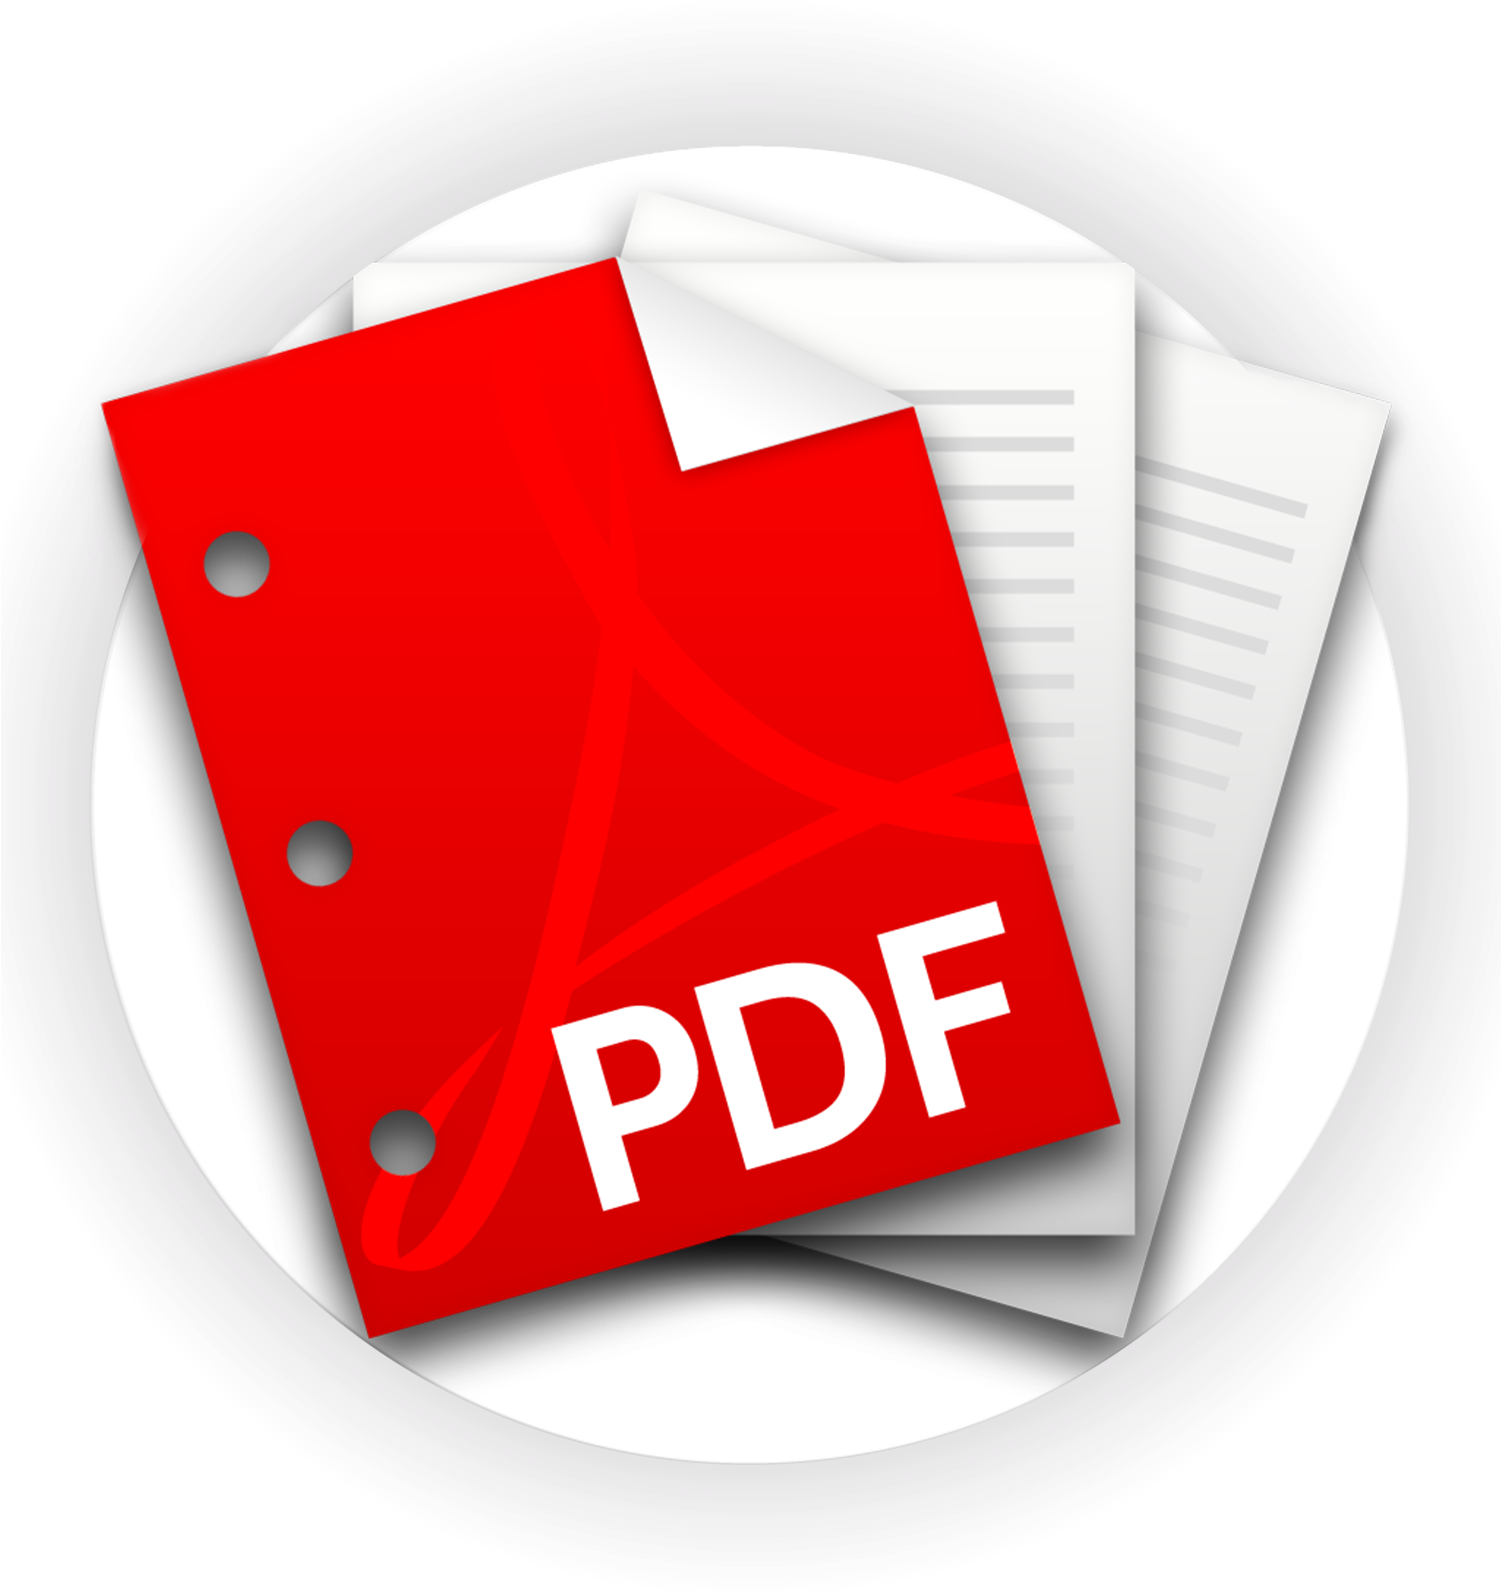 Files price. Пдф файл. Иконка pdf. Иконка pdf файла. Иконка документа pdf.